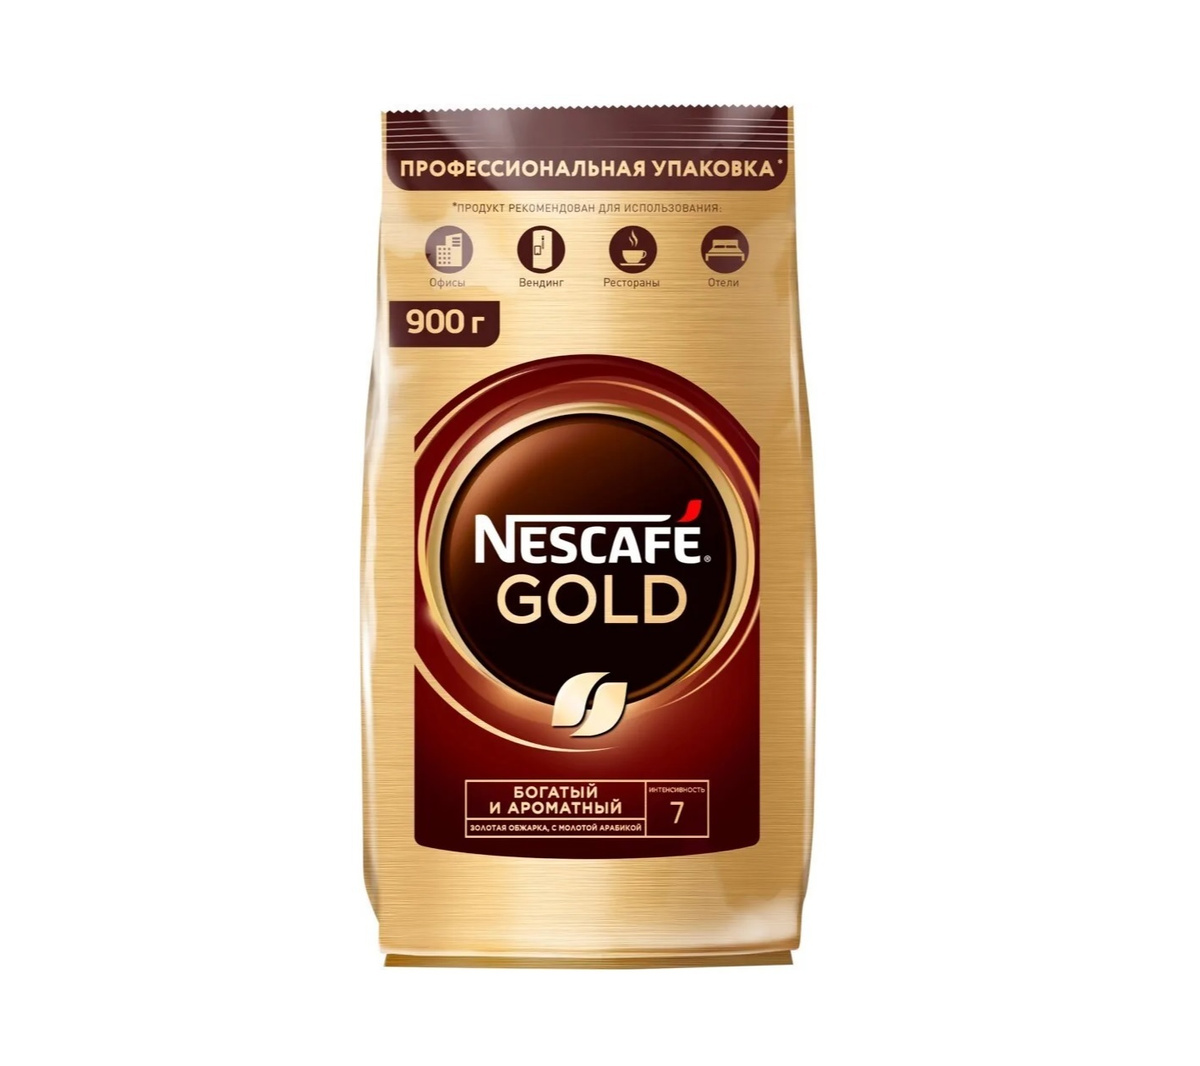 Nescafe gold 320. Nescafe кофе Gold 900г.. Кофе молотый Нескафе Голд. Кофе Нескафе Голд пакет 320г. Кофе растворимый Нескафе Голд 320г м/у.